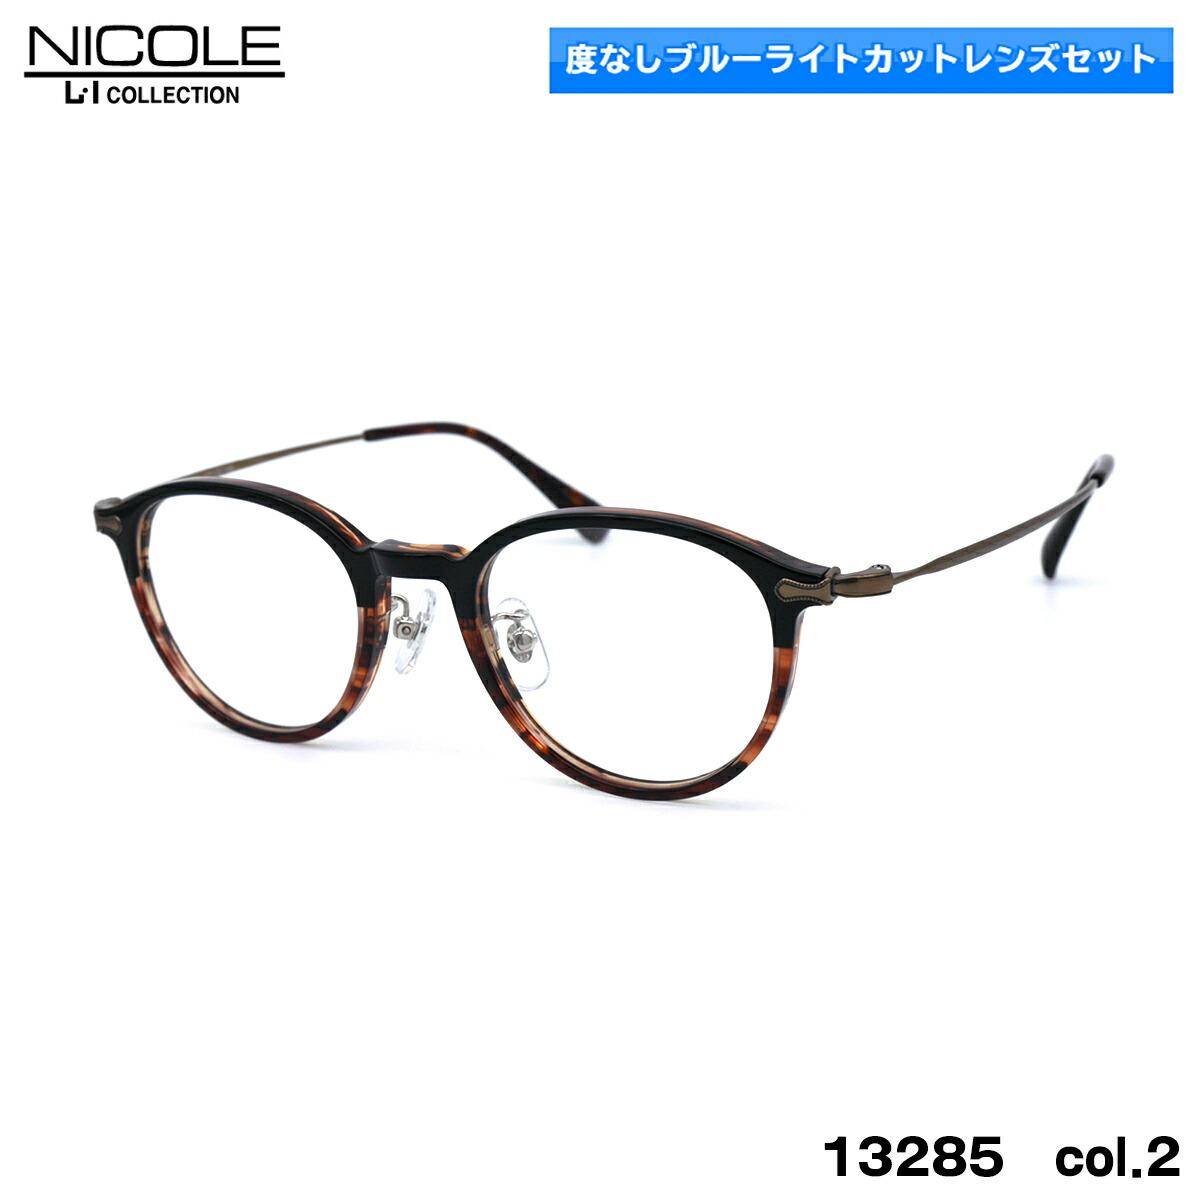 No. 2261-メガネ NICOLE【フレームのみ価格】-